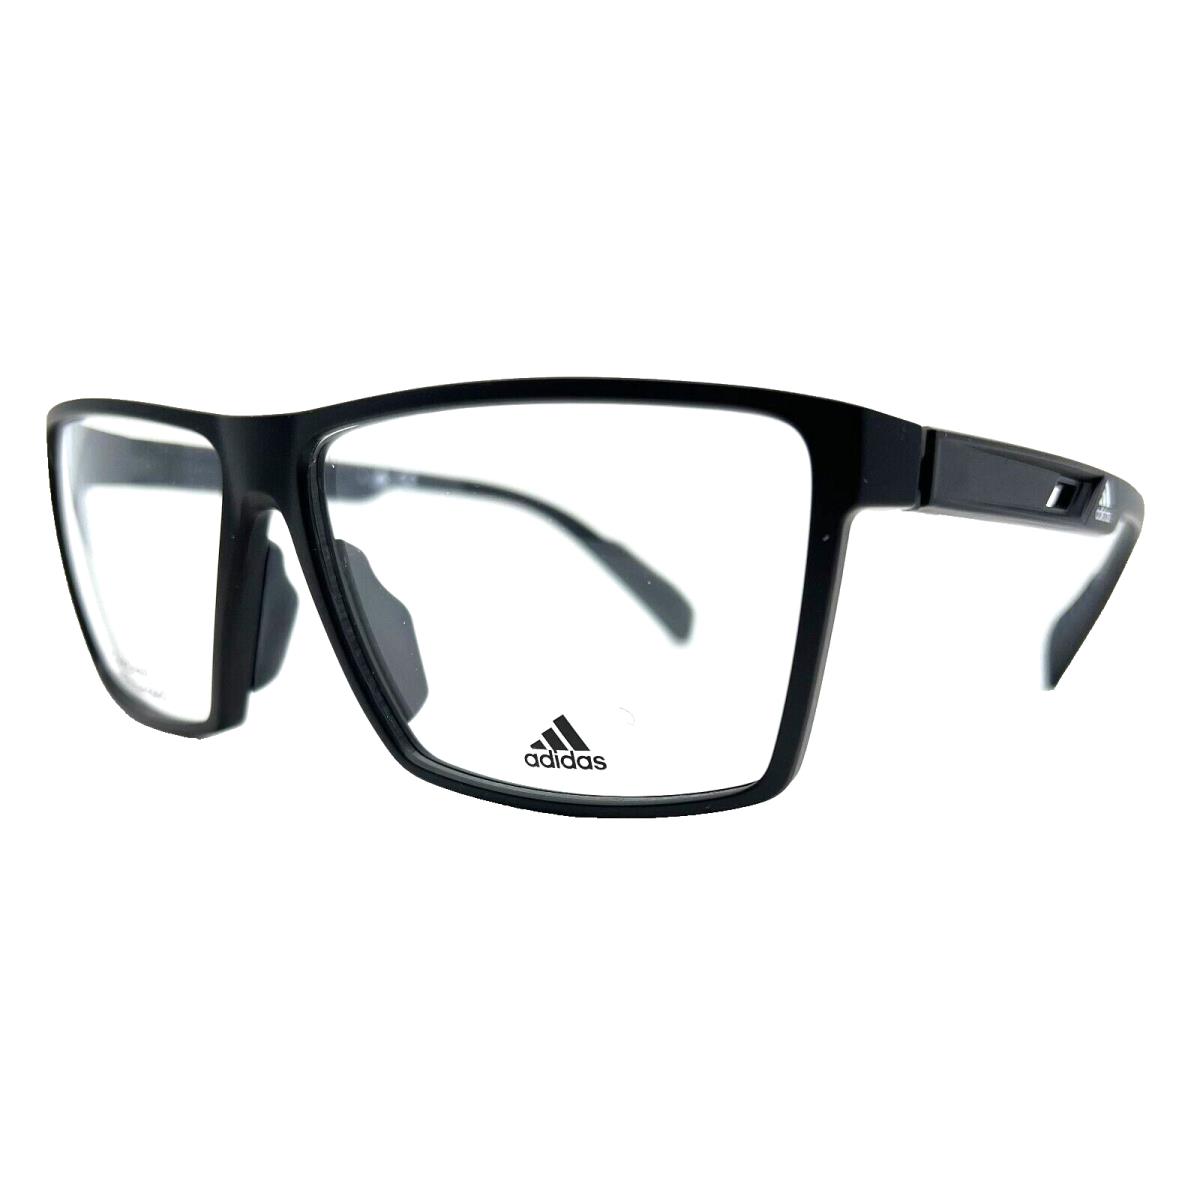 Adidas Sport SP5007 002 60/13/140 - Black - Eyeglasses Case